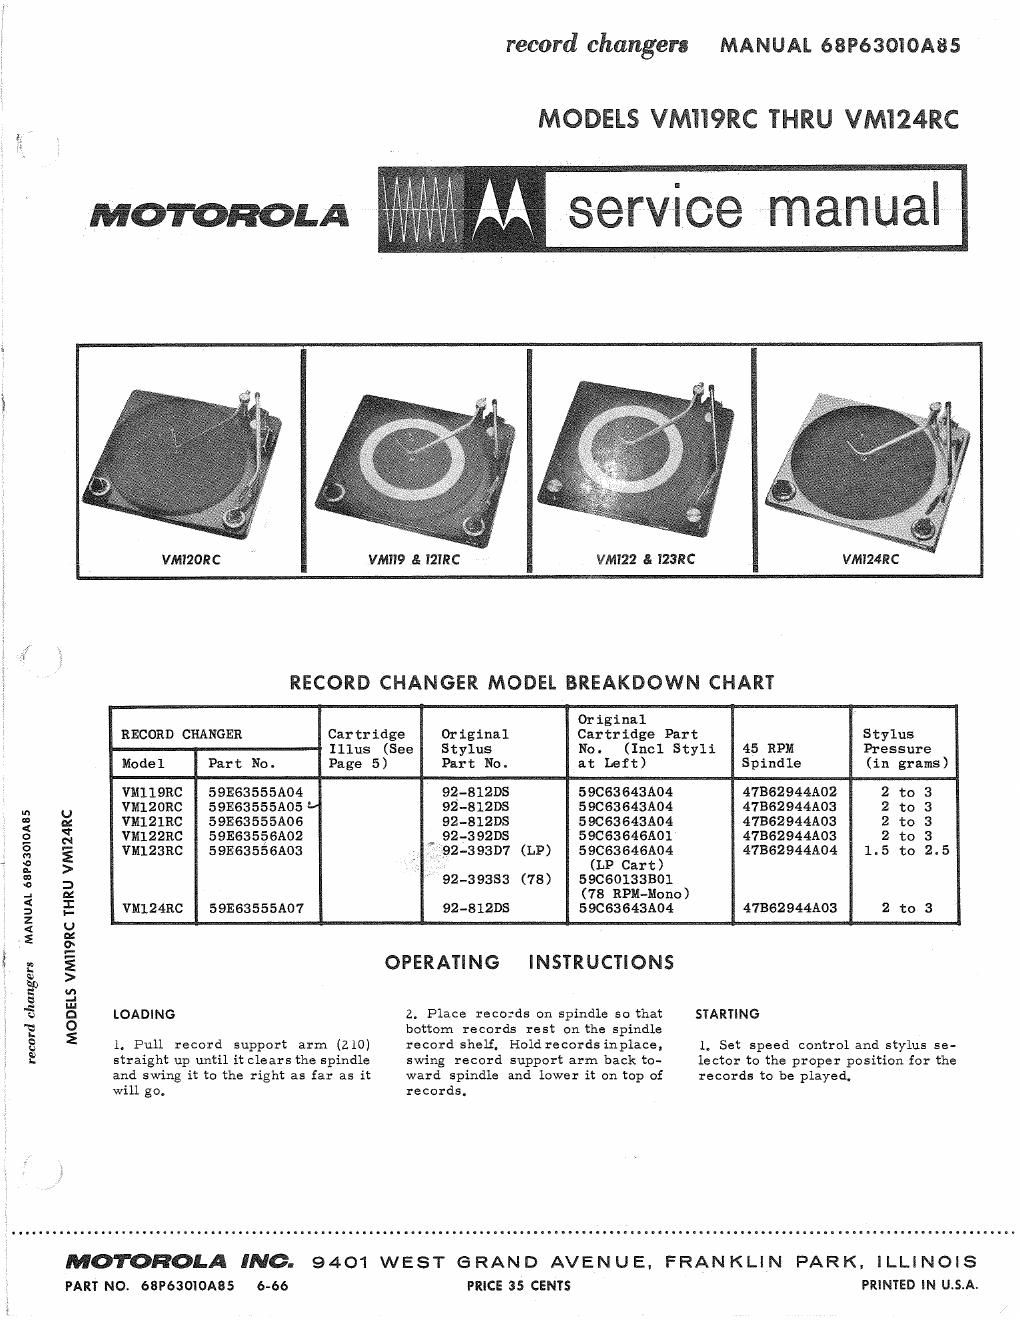 motorola vm 119 rc service manual